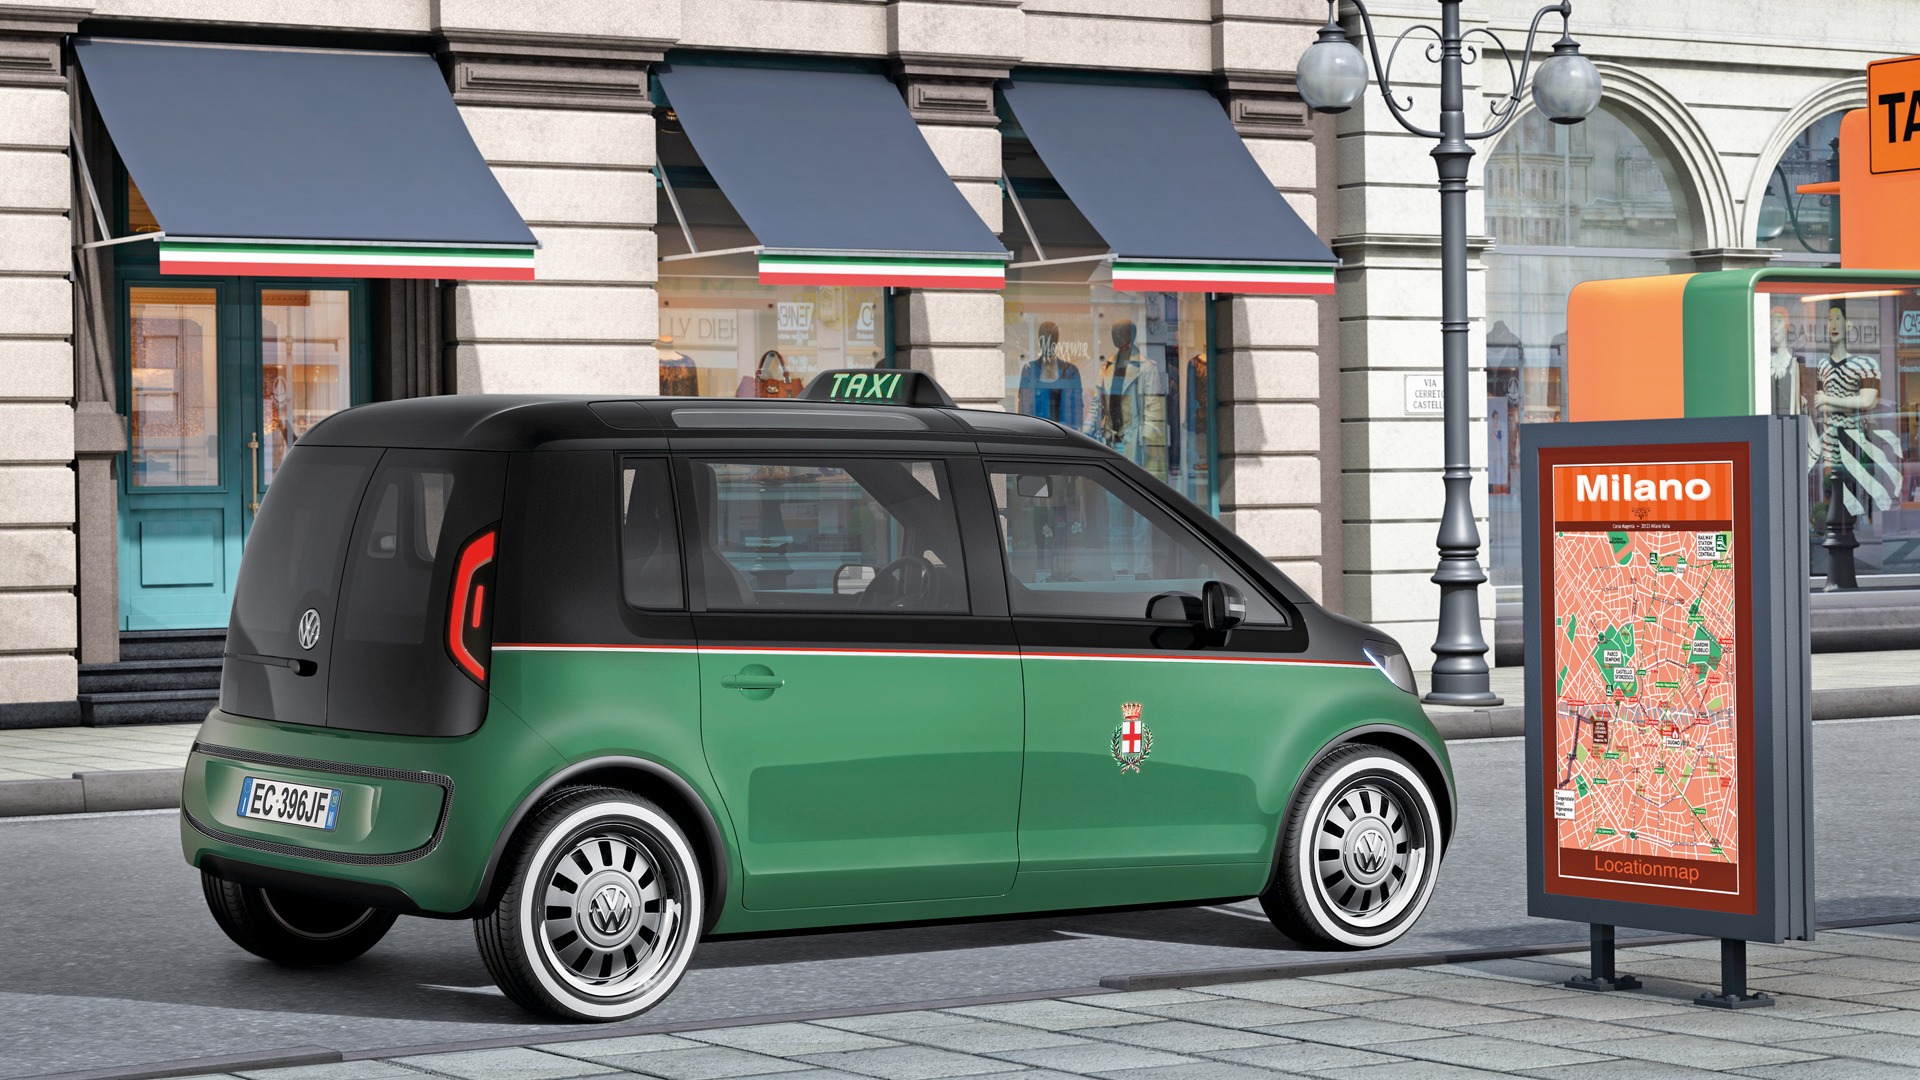 Concept Car Volkswagen Milano Taxi - 2010 大众4 - 1920x1080